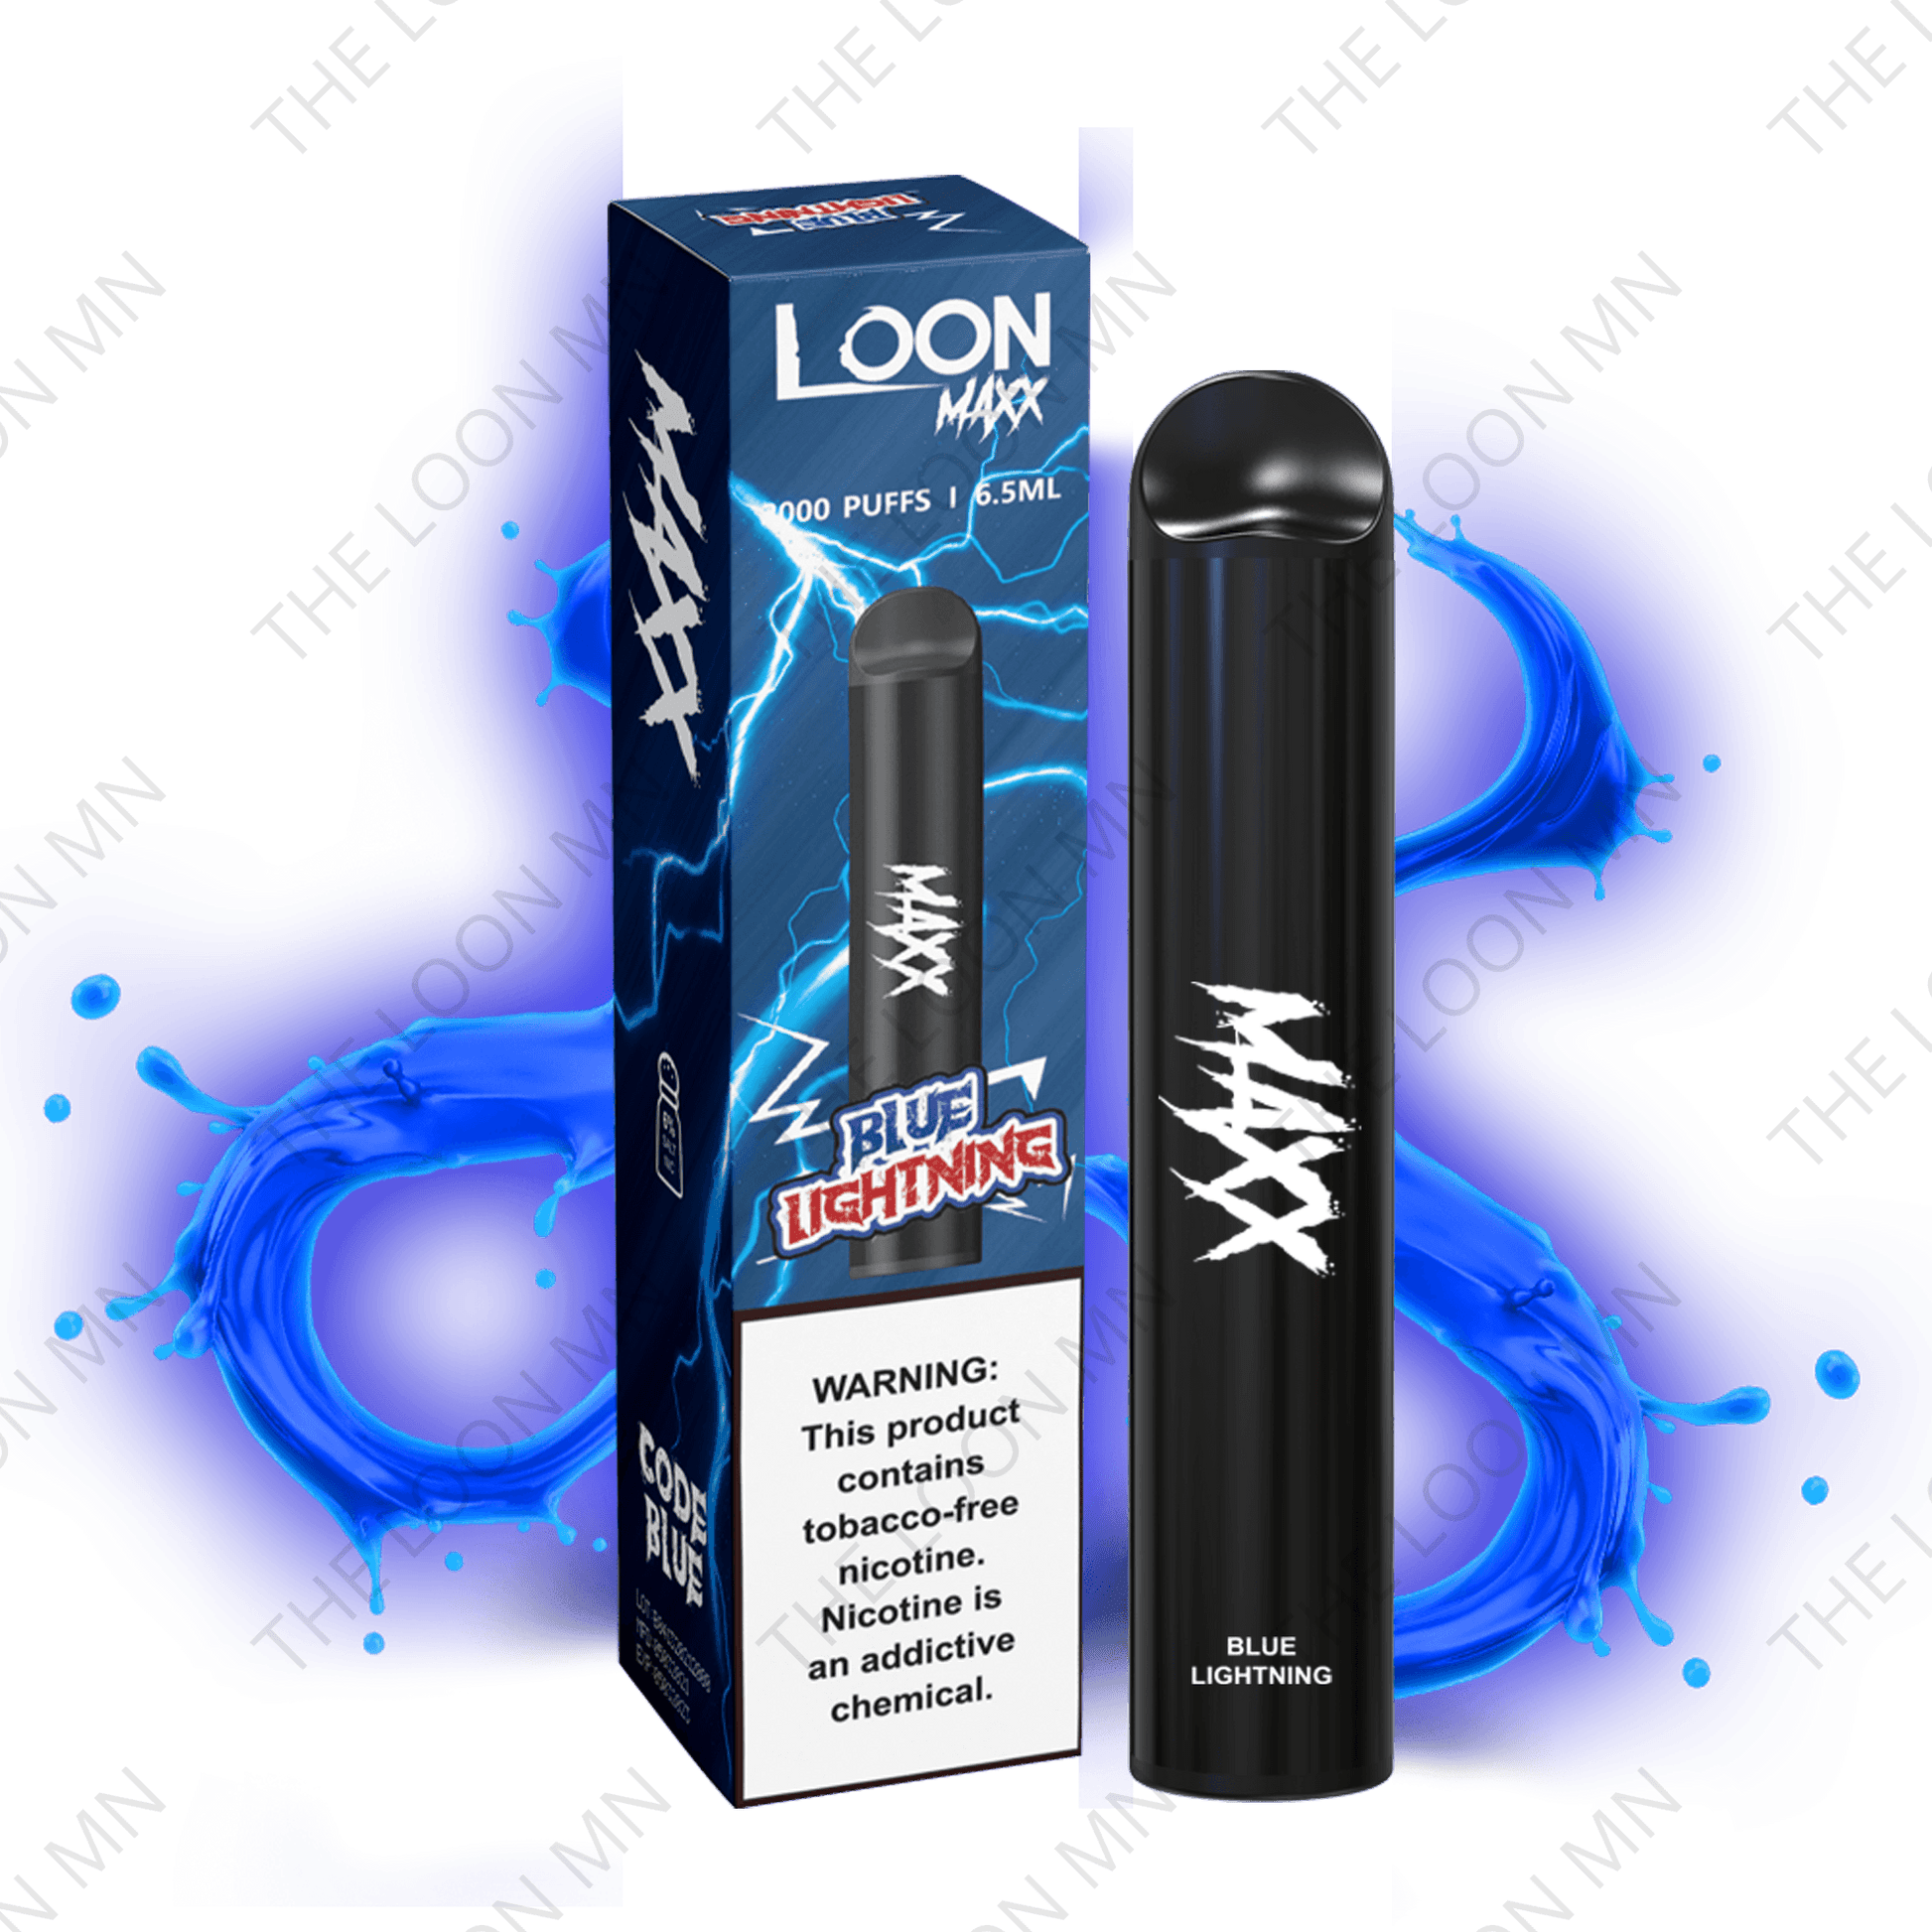 LOON MAXX ZERO NICOTINE - BLUE LIGHTNING - The Loon